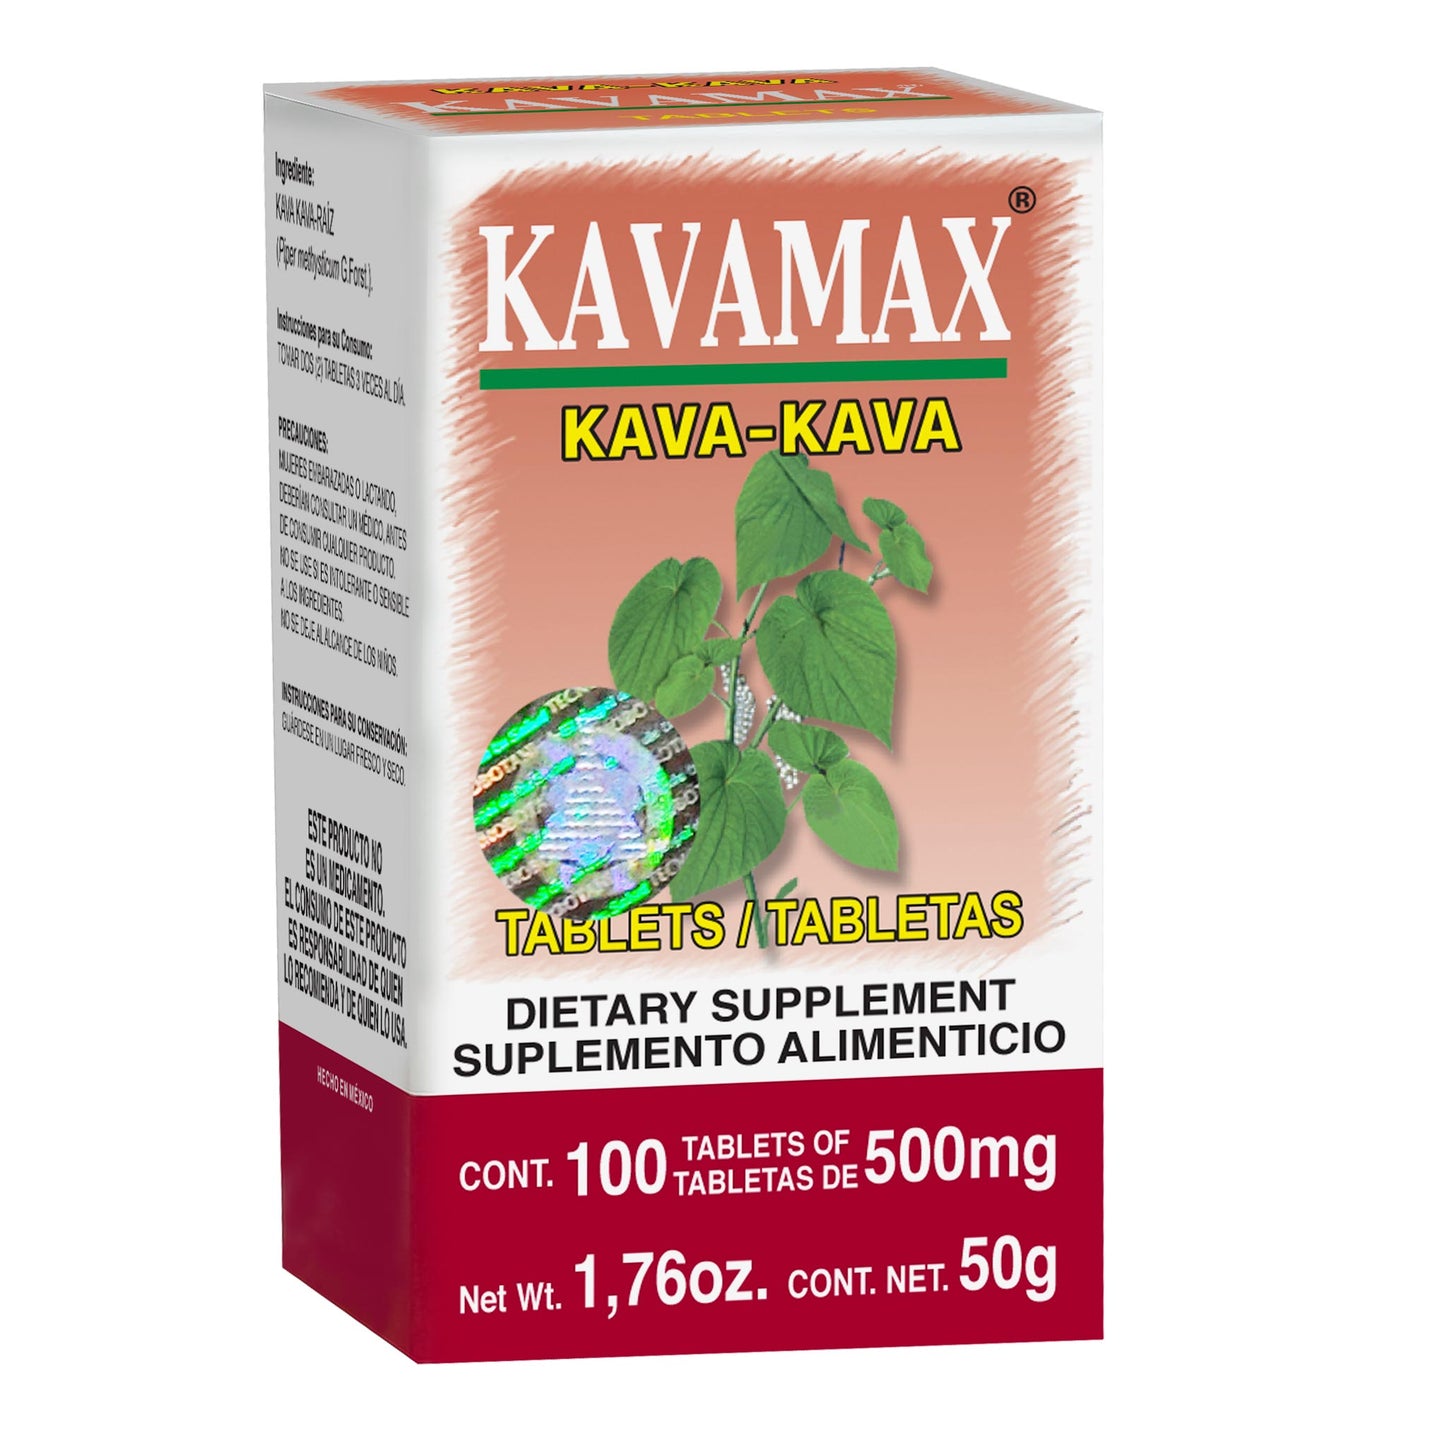 KAVAMAX ® 100 tabletas